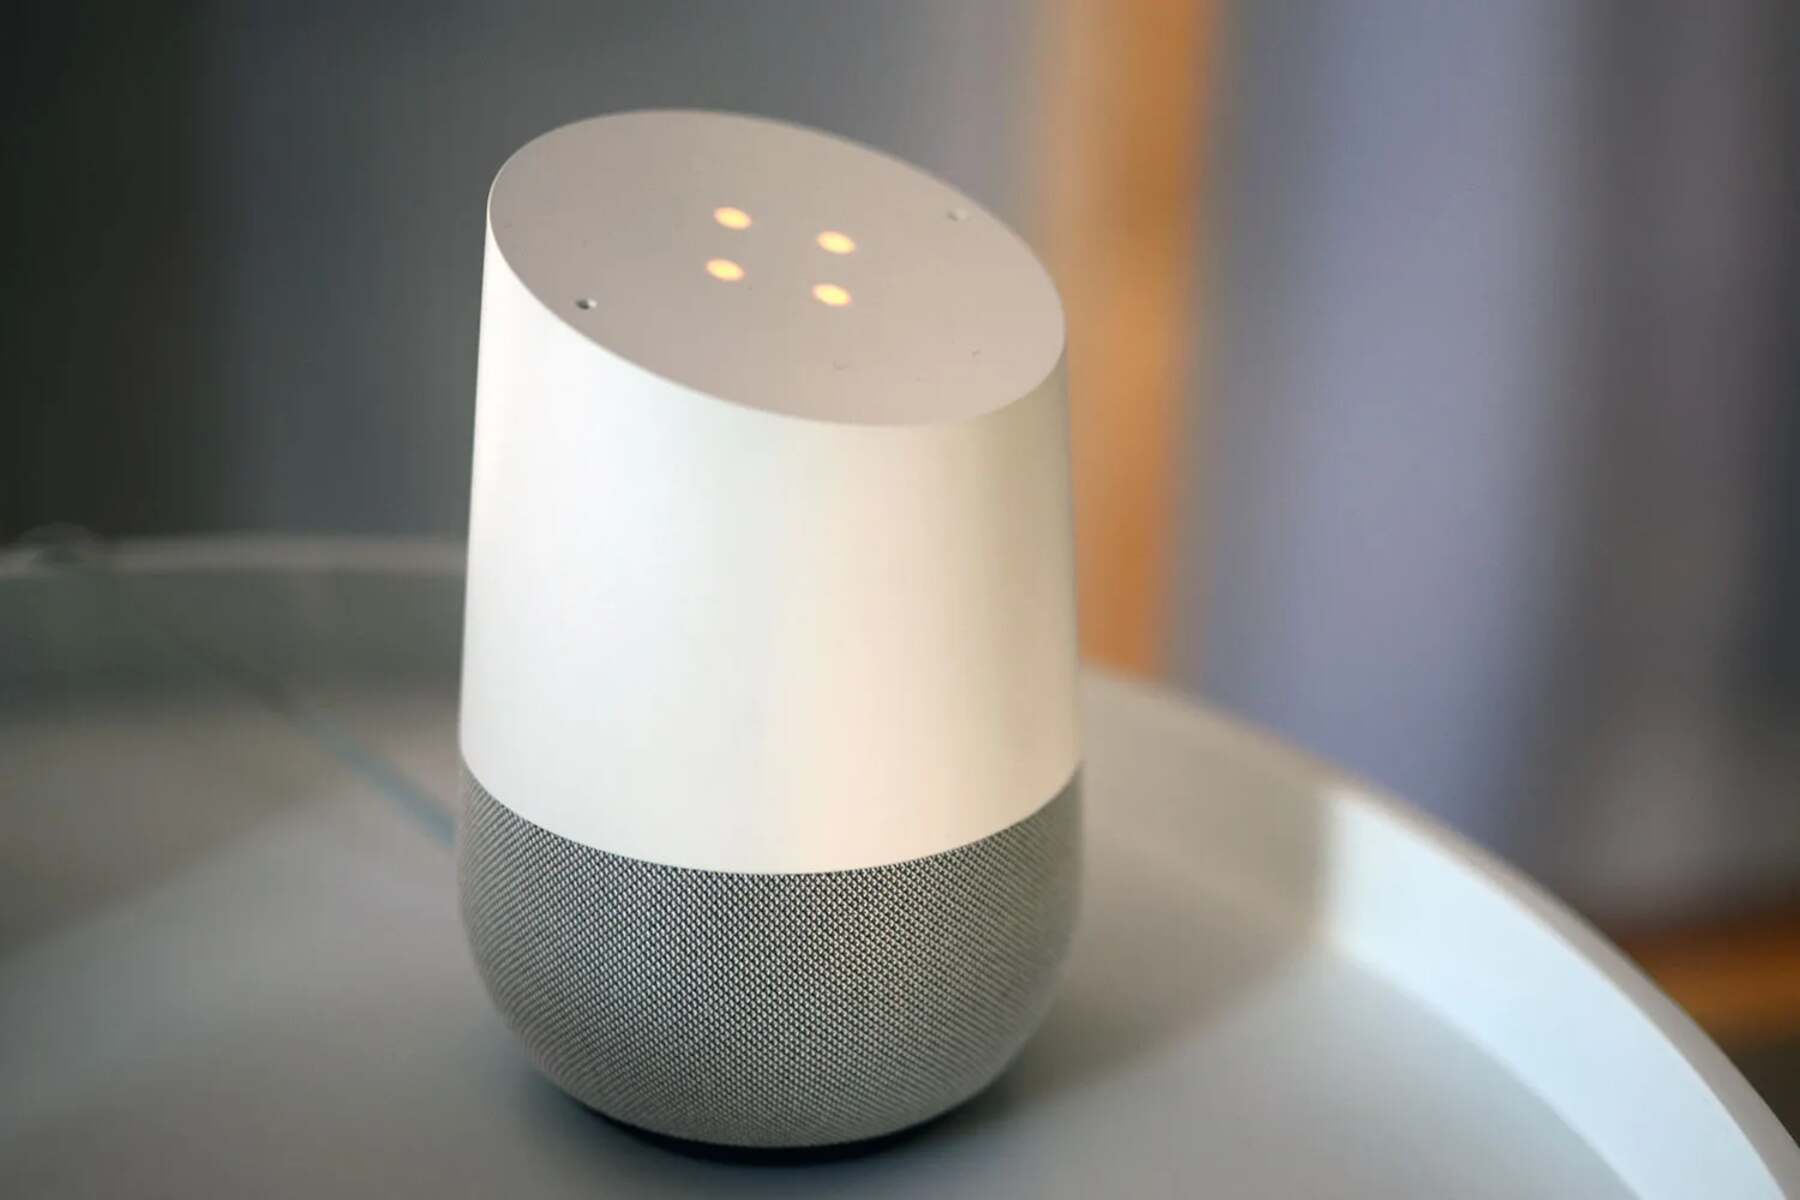 How To Use Google Smart Speaker